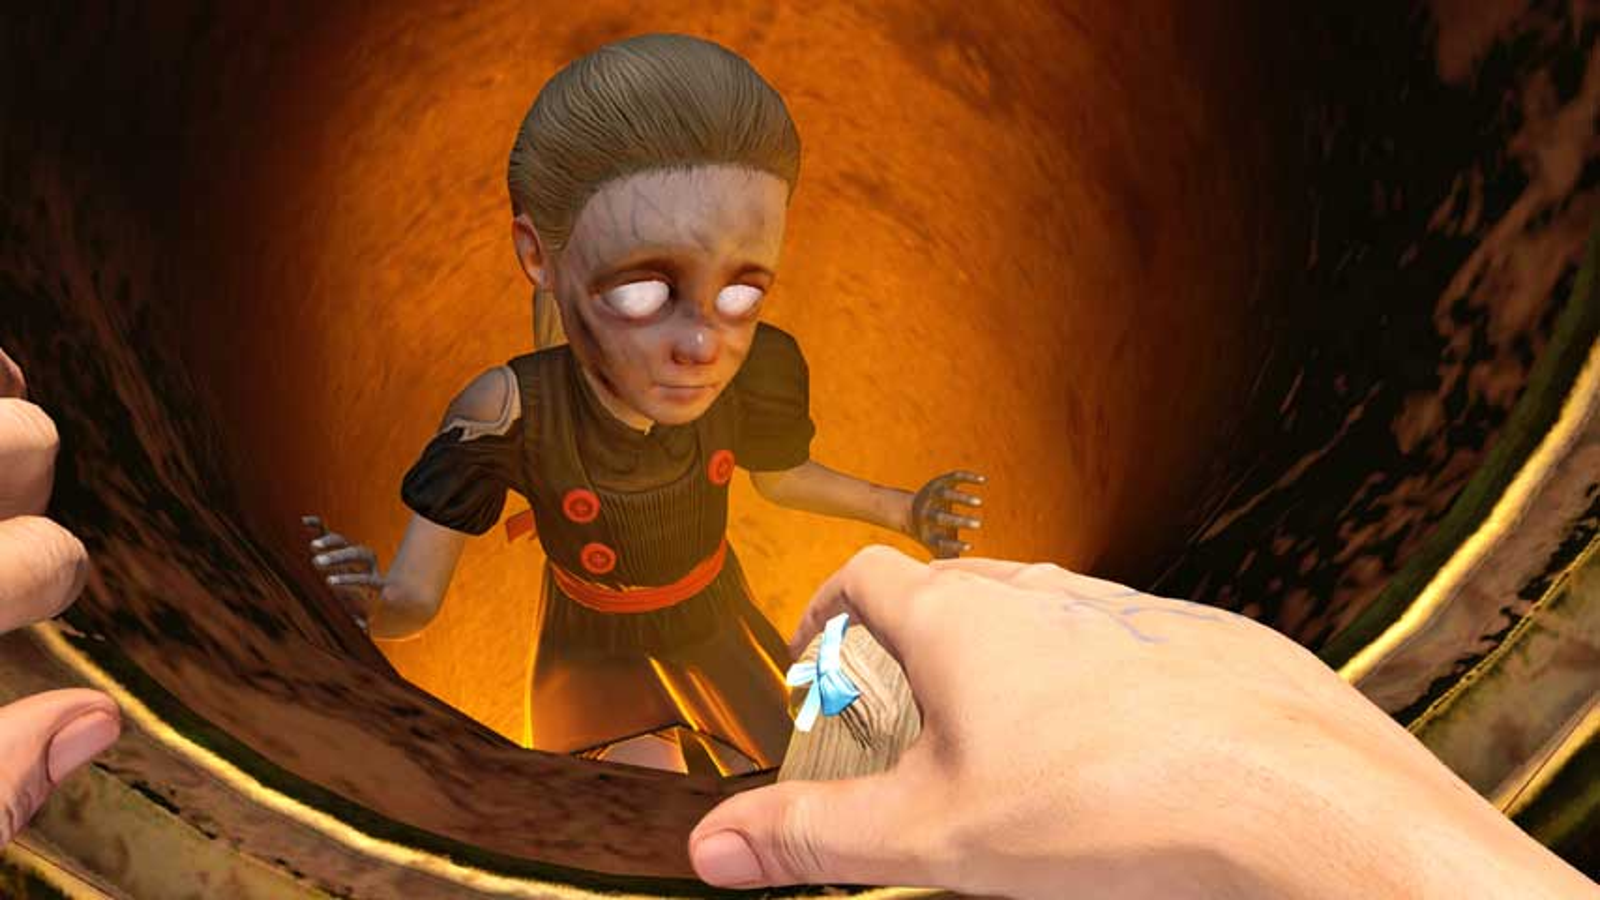 Ken Levine discusses 'BioShock Infinite's Burial at Sea' DLC